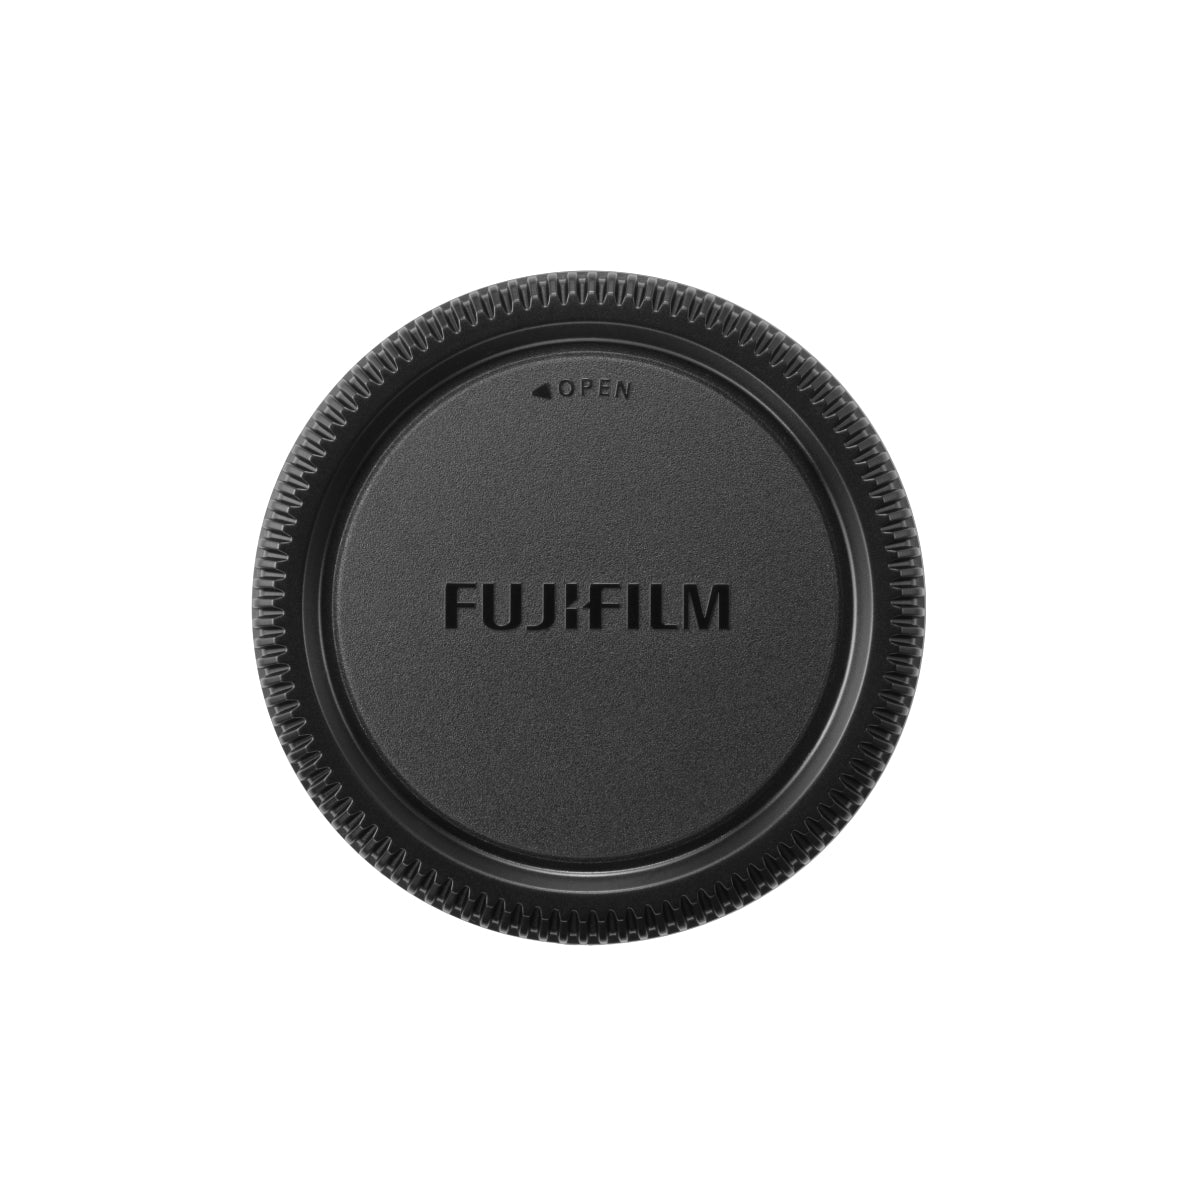 Fujifilm Body Cap for GFX Series